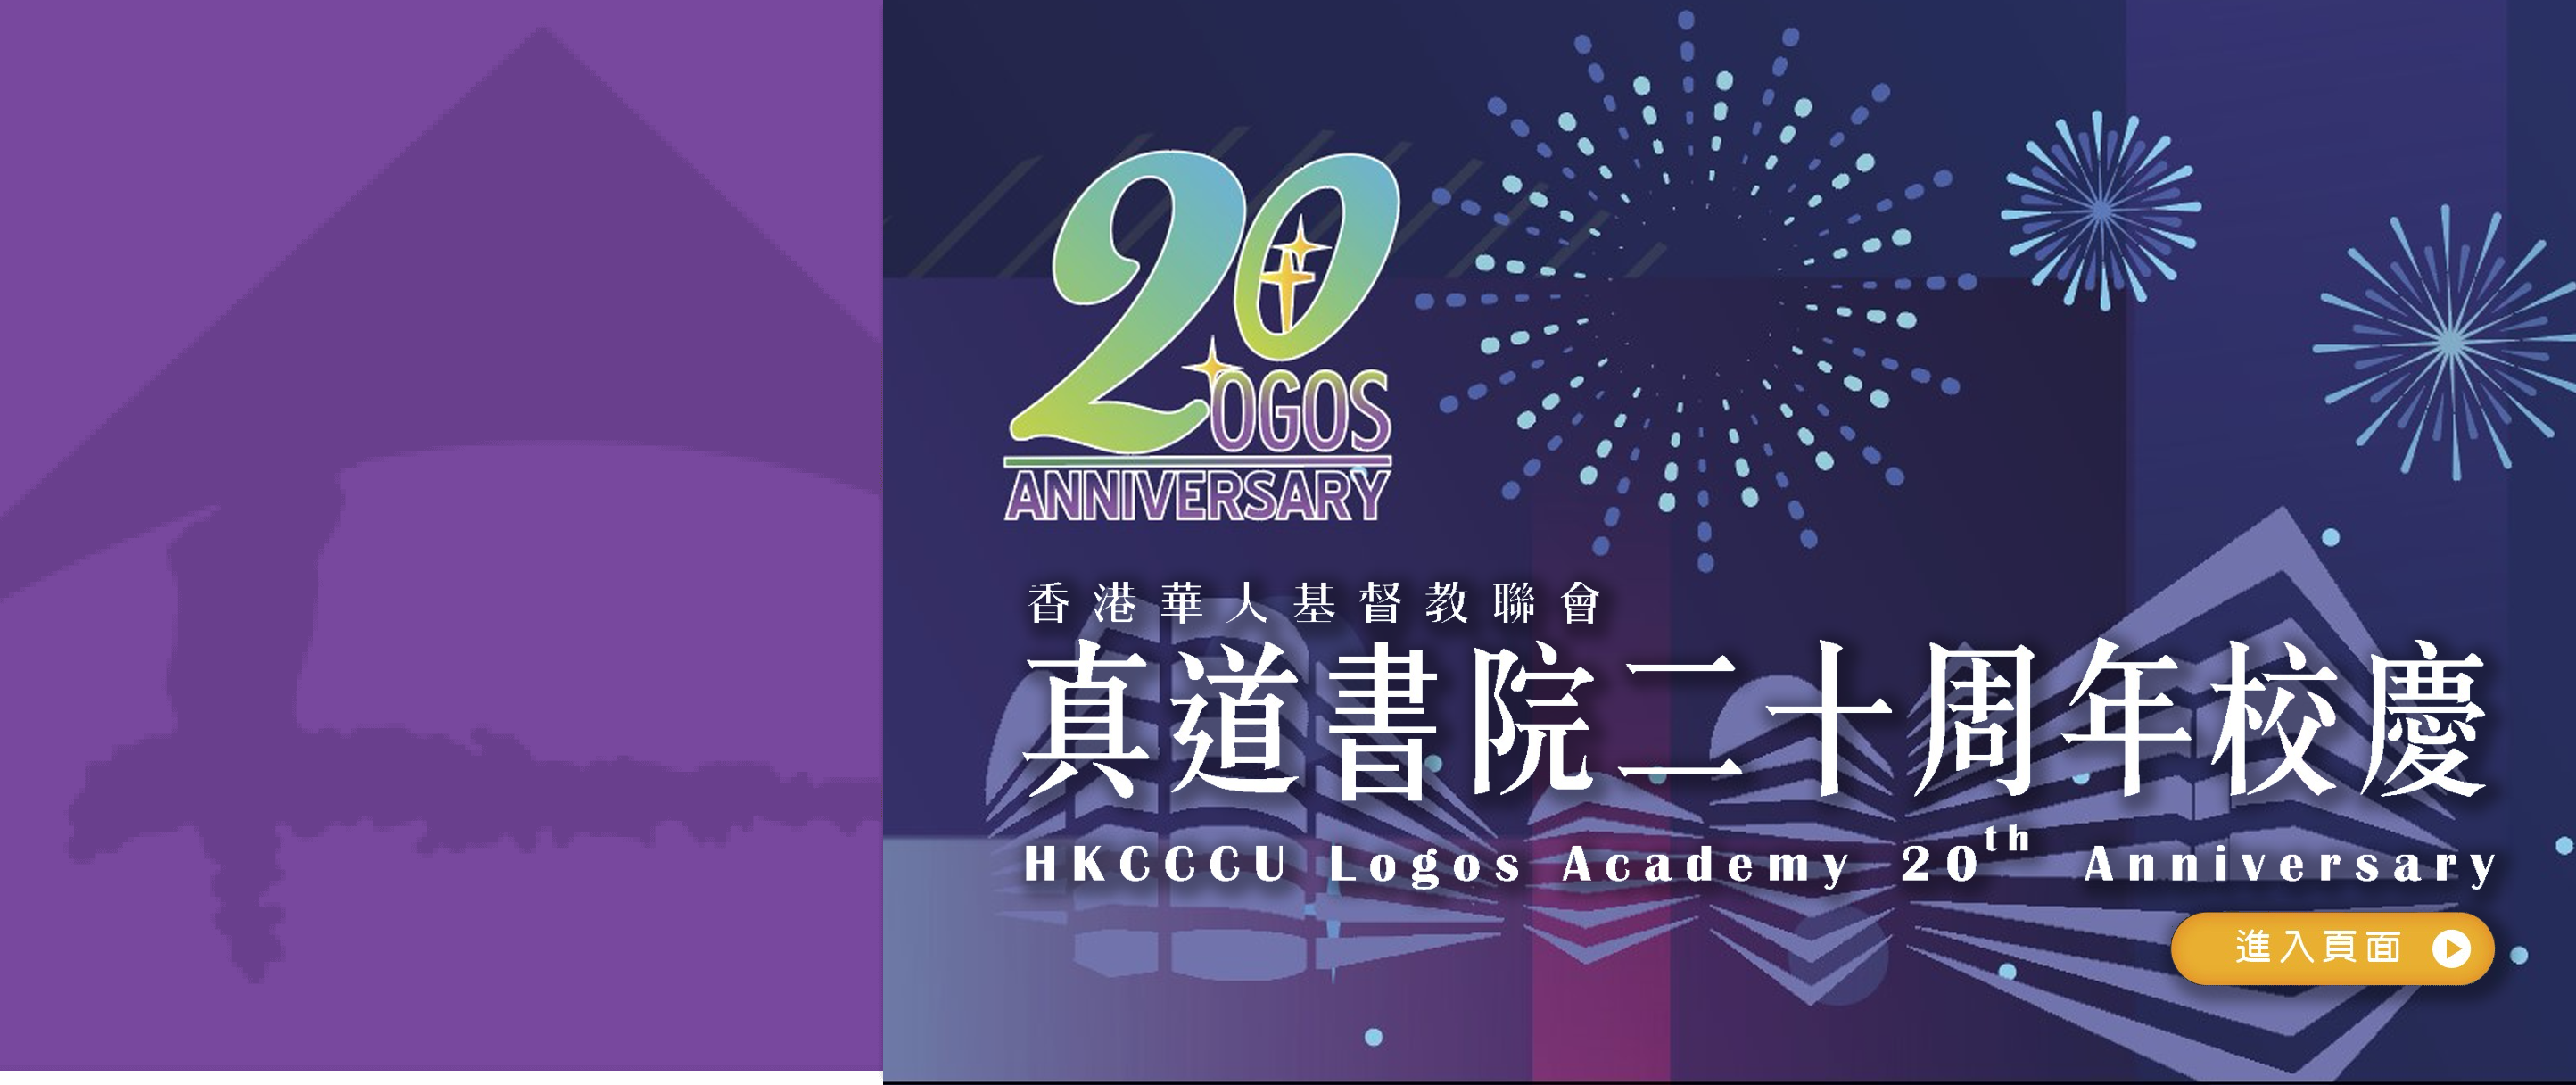 HKCCCU Logos Academy 20th Anniversary